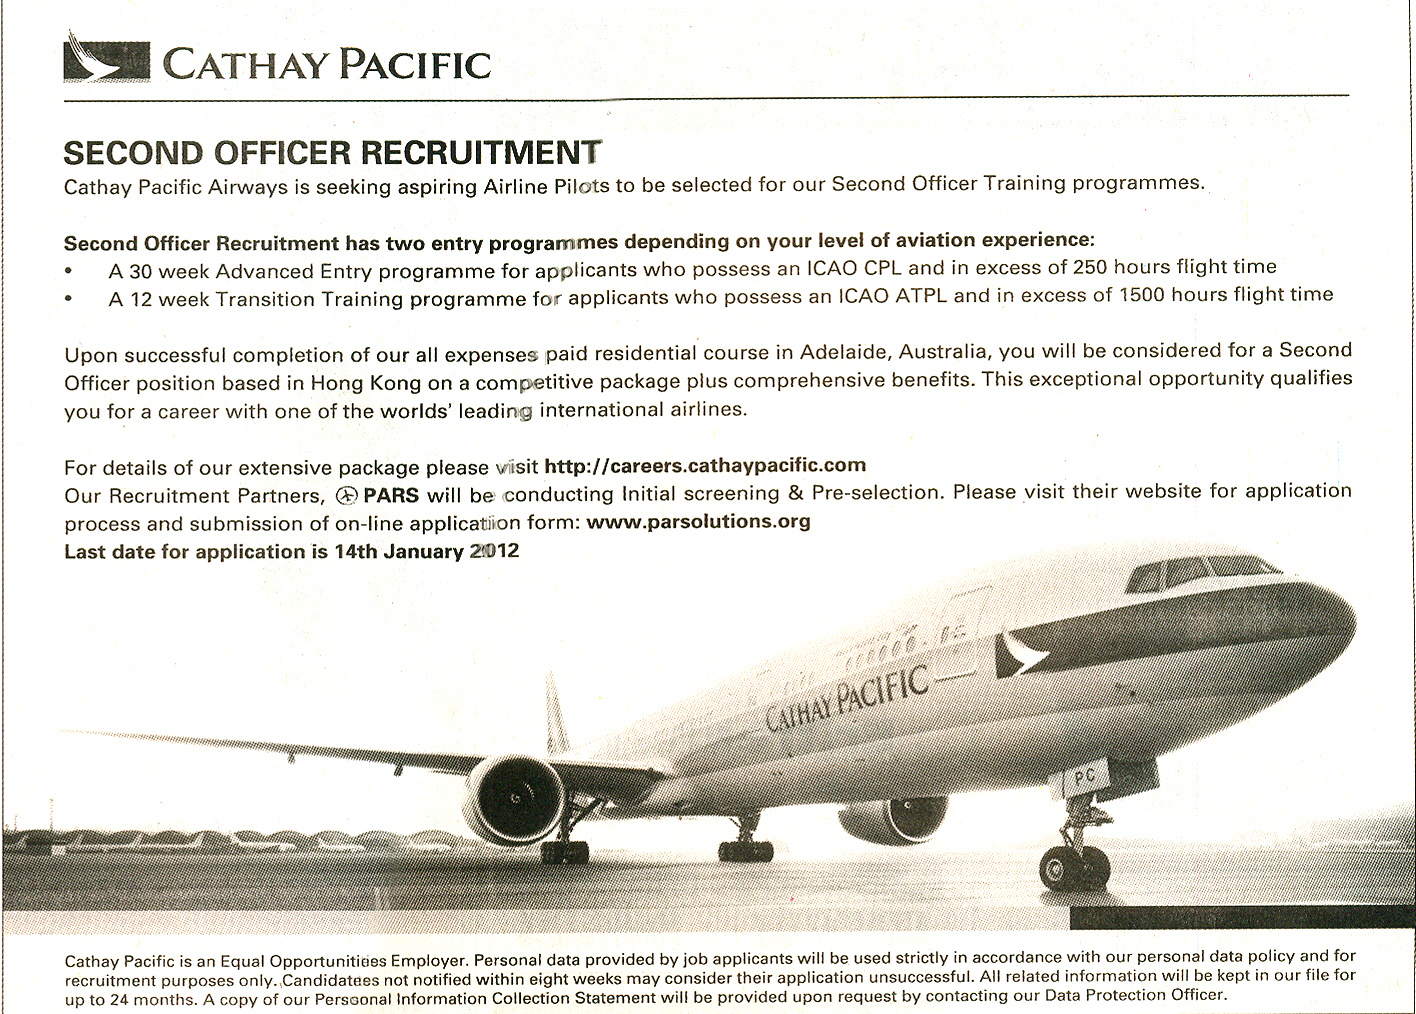 http://4.bp.blogspot.com/-nl7vADYx8z0/TwIReih55tI/AAAAAAAARR0/fUt5JUut6lg/s1600/Second-Officer-Recruitment-In-Cathay-Pacific.jpg